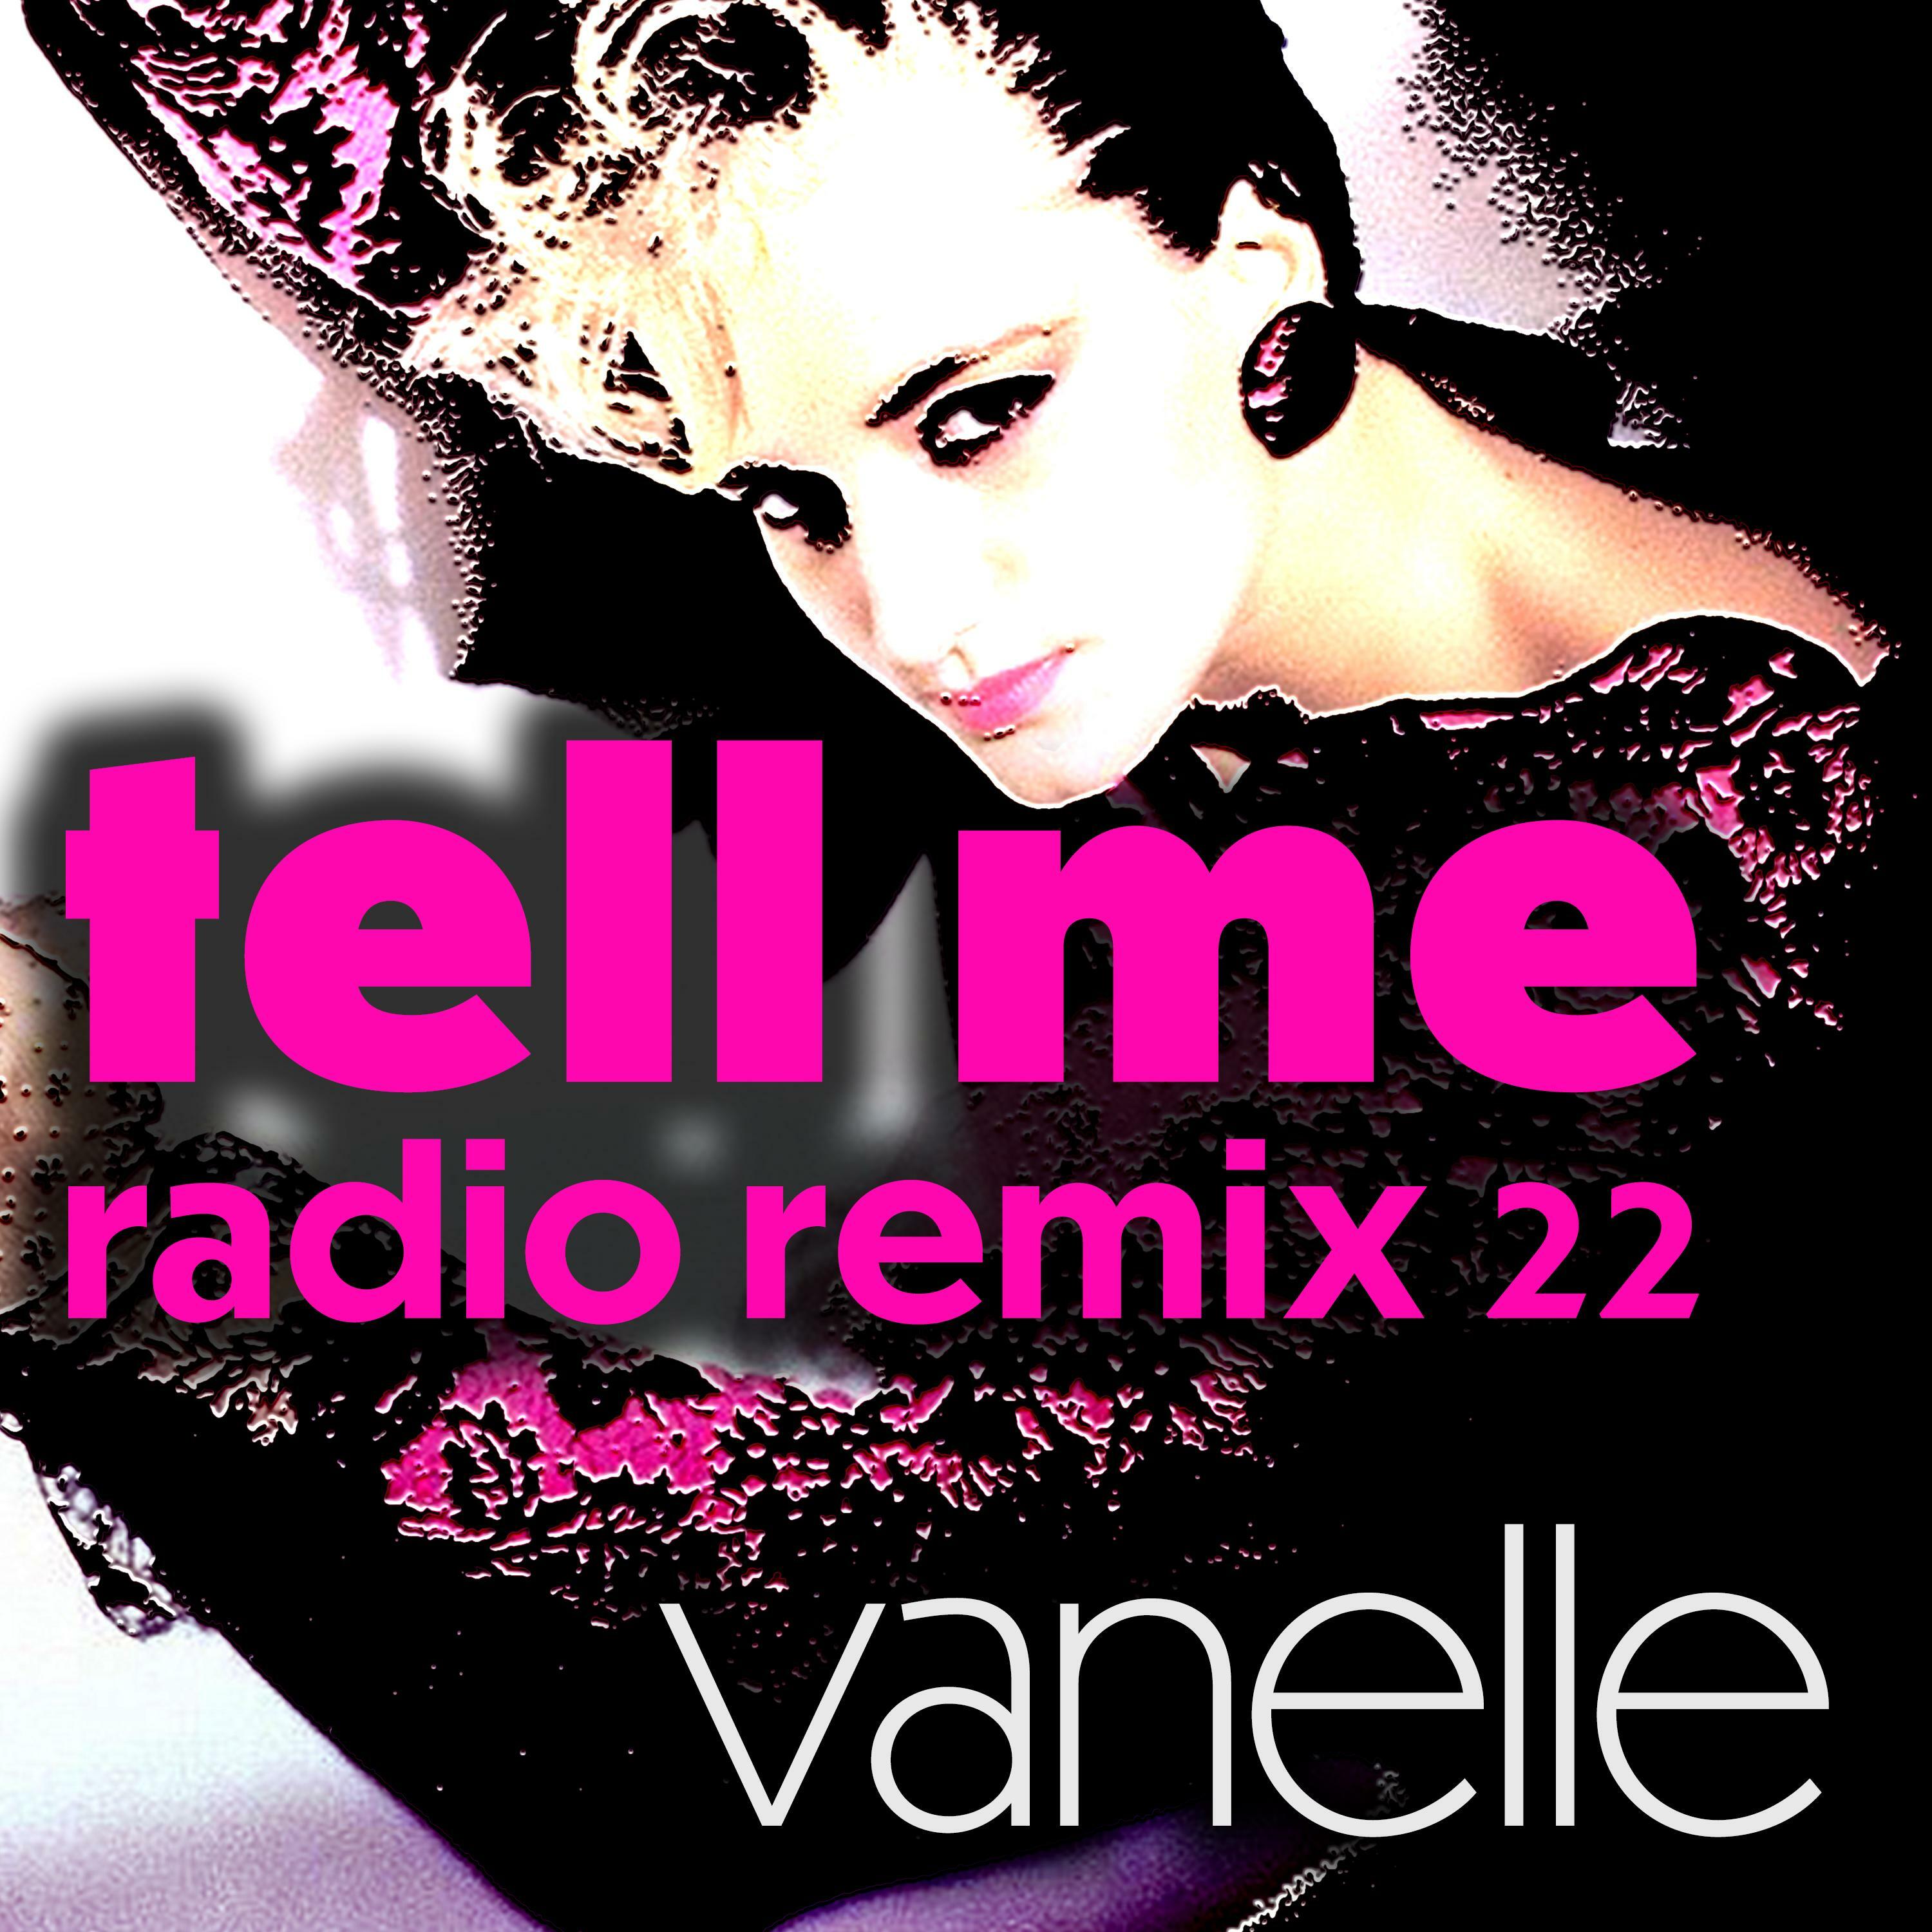 Idea 22 remix. Vanelle – tell me 12" 1985 Hi NRG Euro Disco.